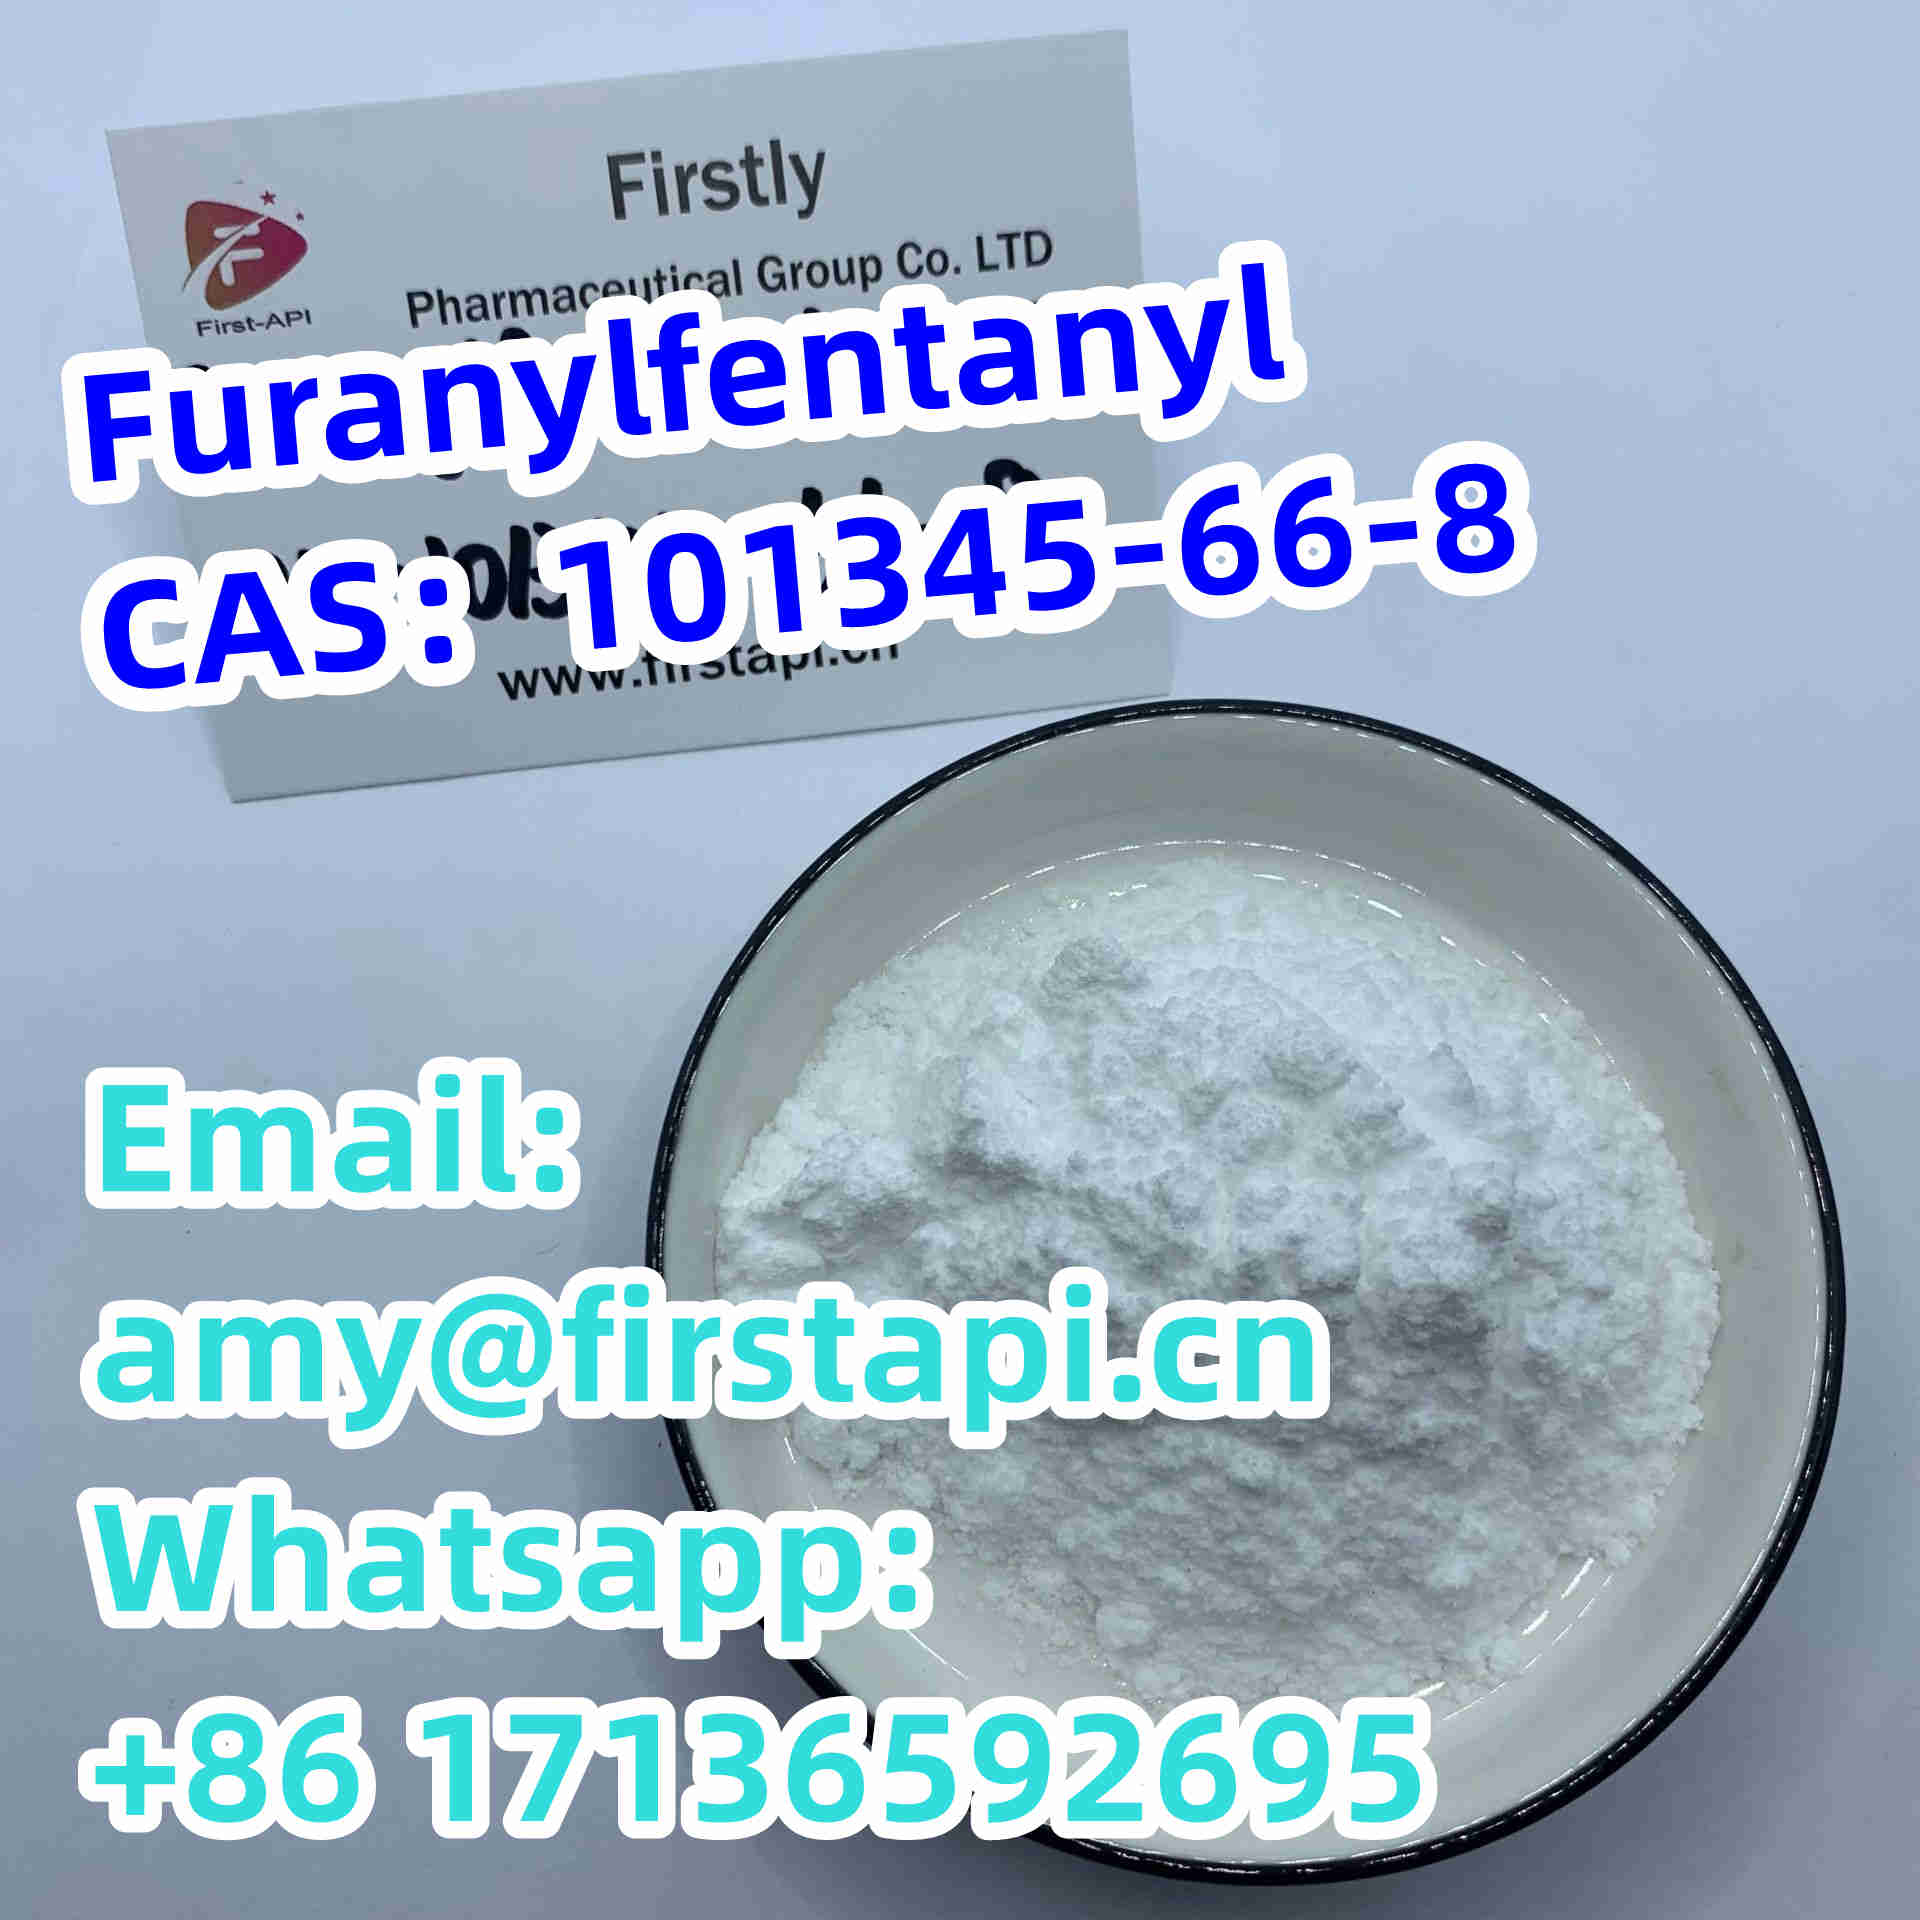 Furanylfentanyl,Whatsapp:+86 17136592695,CAS No.:101345-66-8, - photo